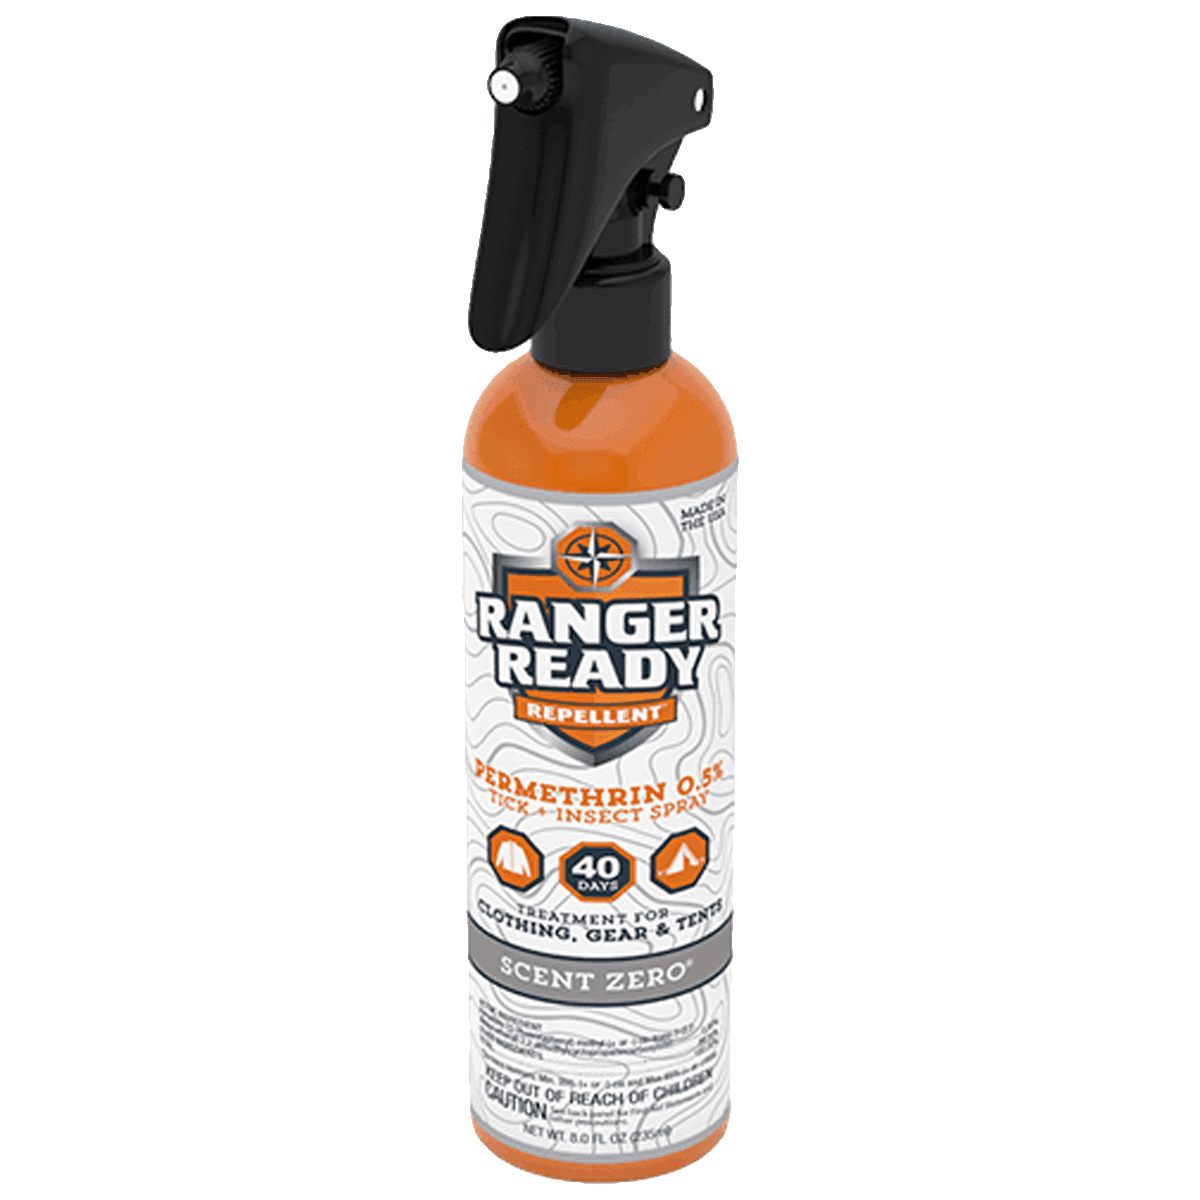 Ranger Ready Clothing Worn Repellent Permethrin 0.5% – Line Cutterz